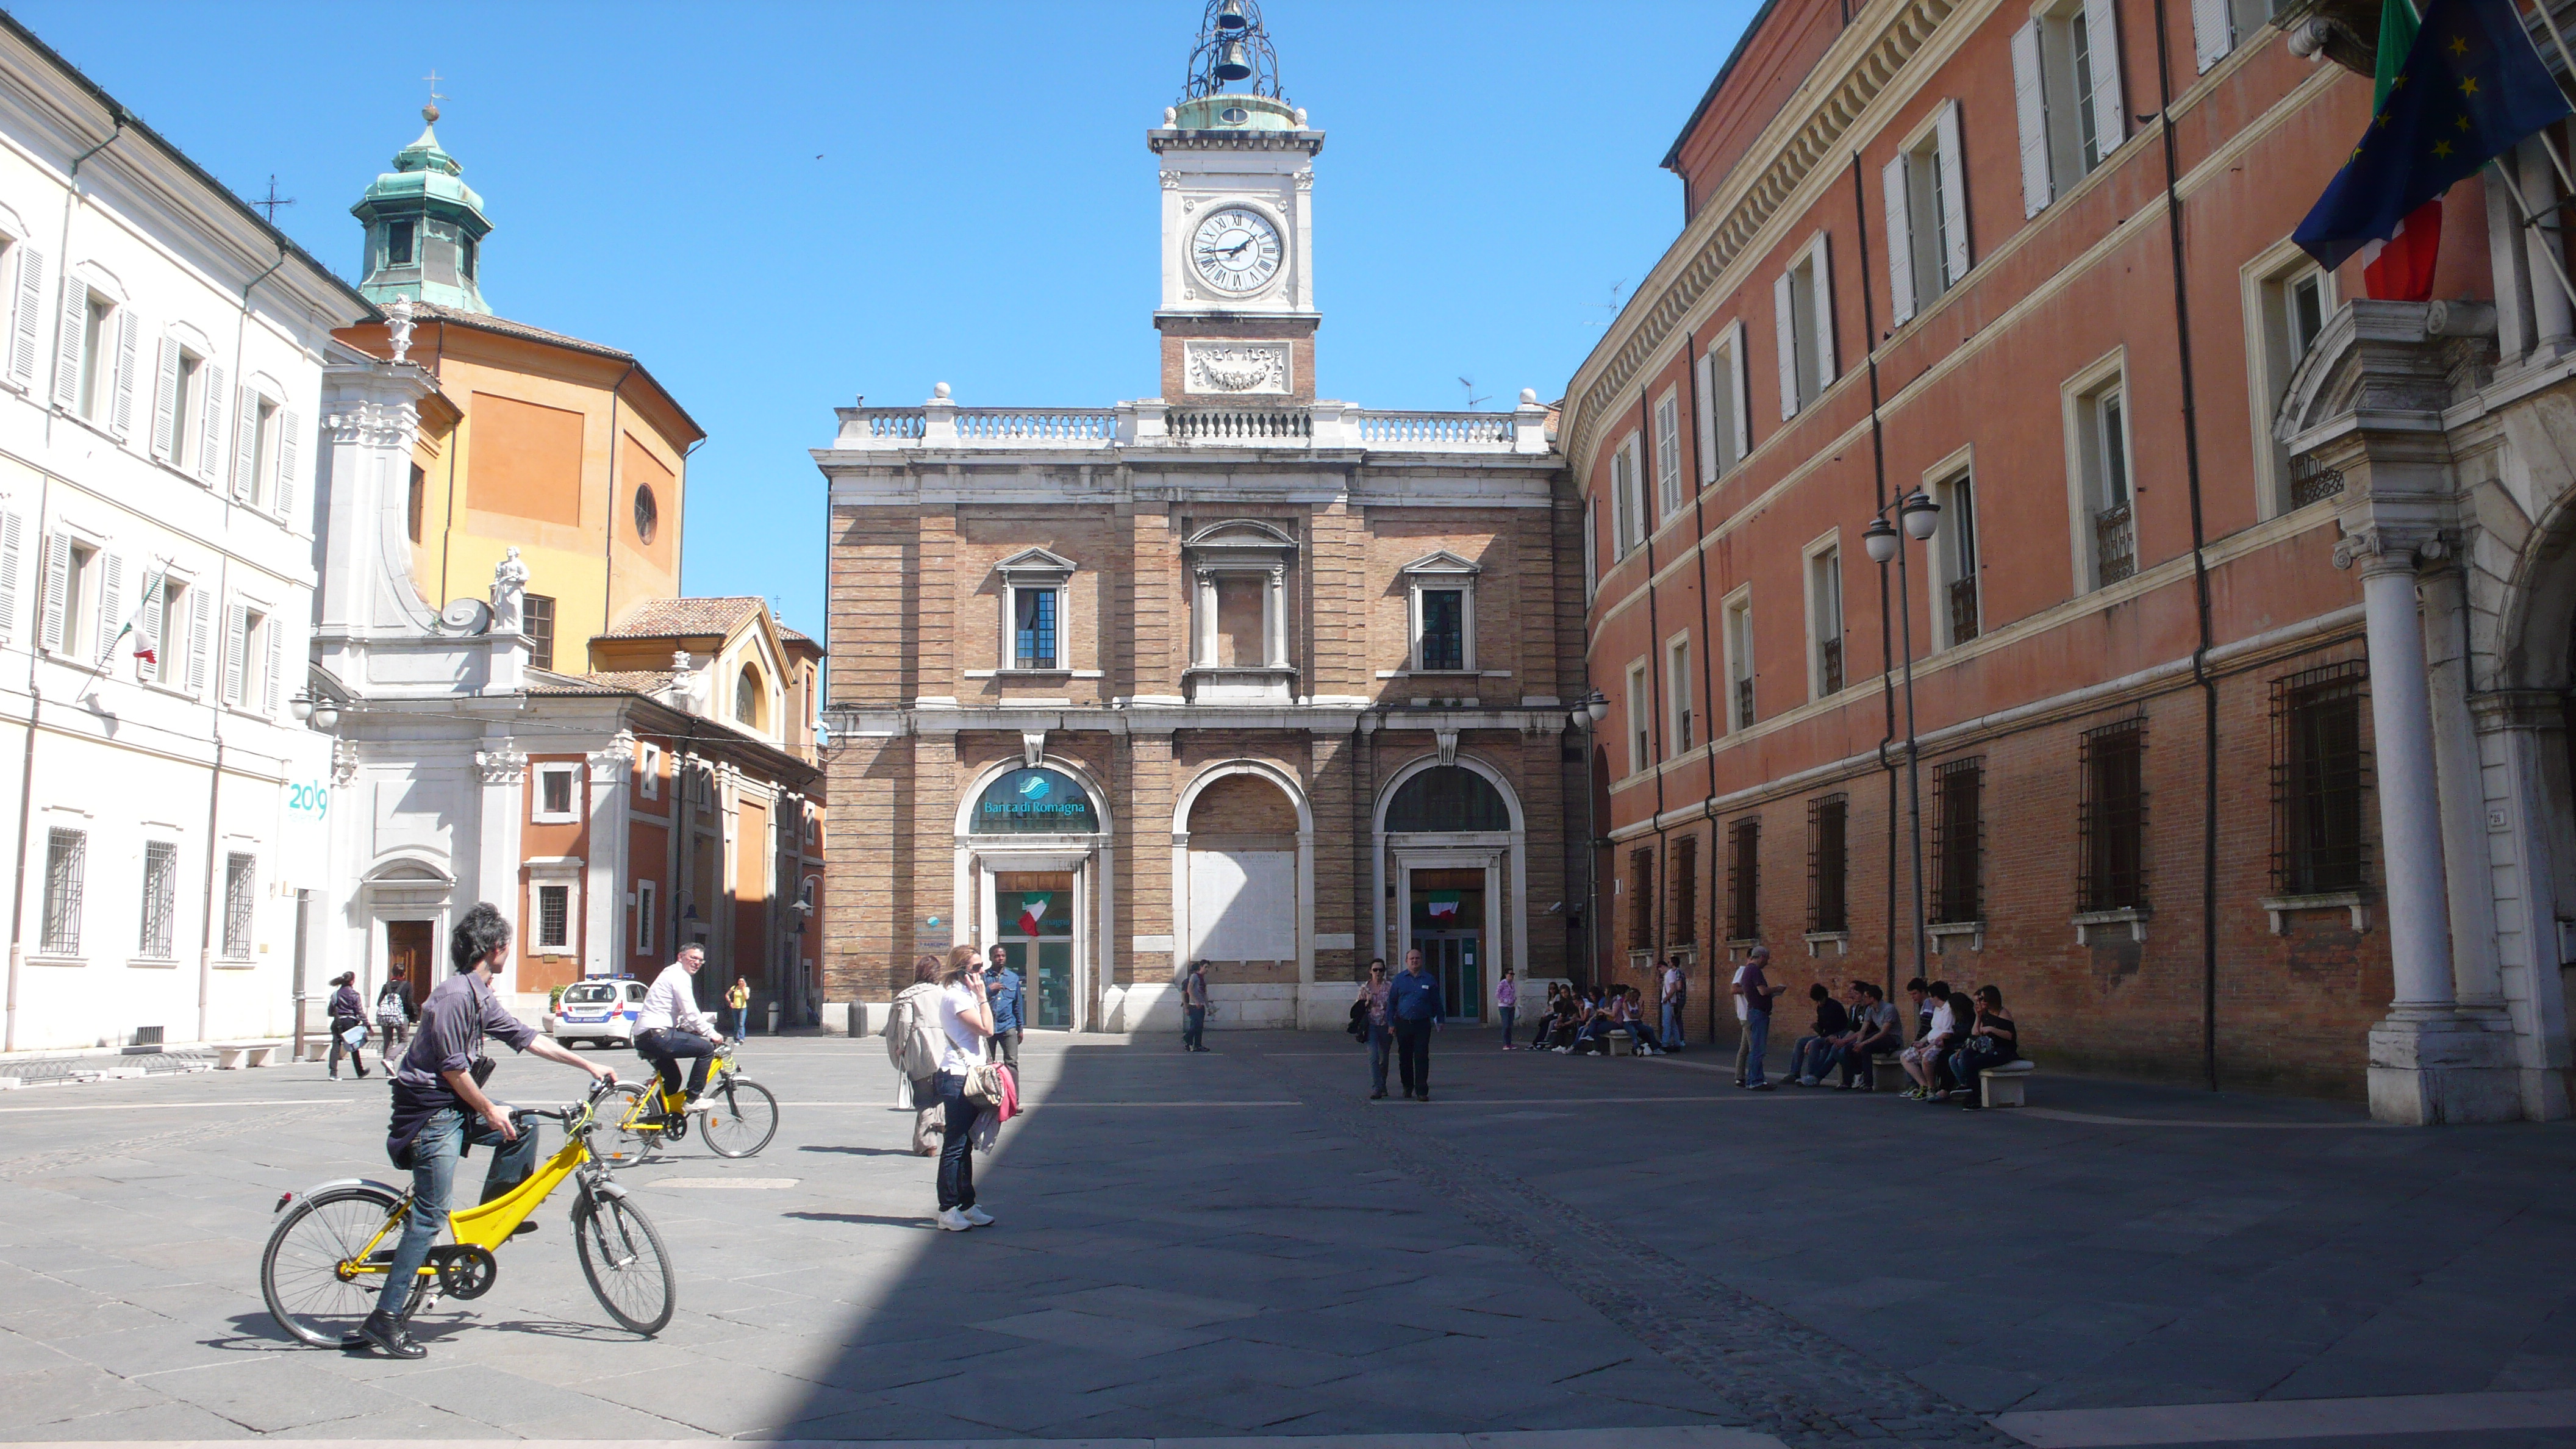 photo: https://upload.wikimedia.org/wikipedia/commons/5/53/Piazza_del_Popolo_e_Residenza_Comunale_-_Ravenna.jpg